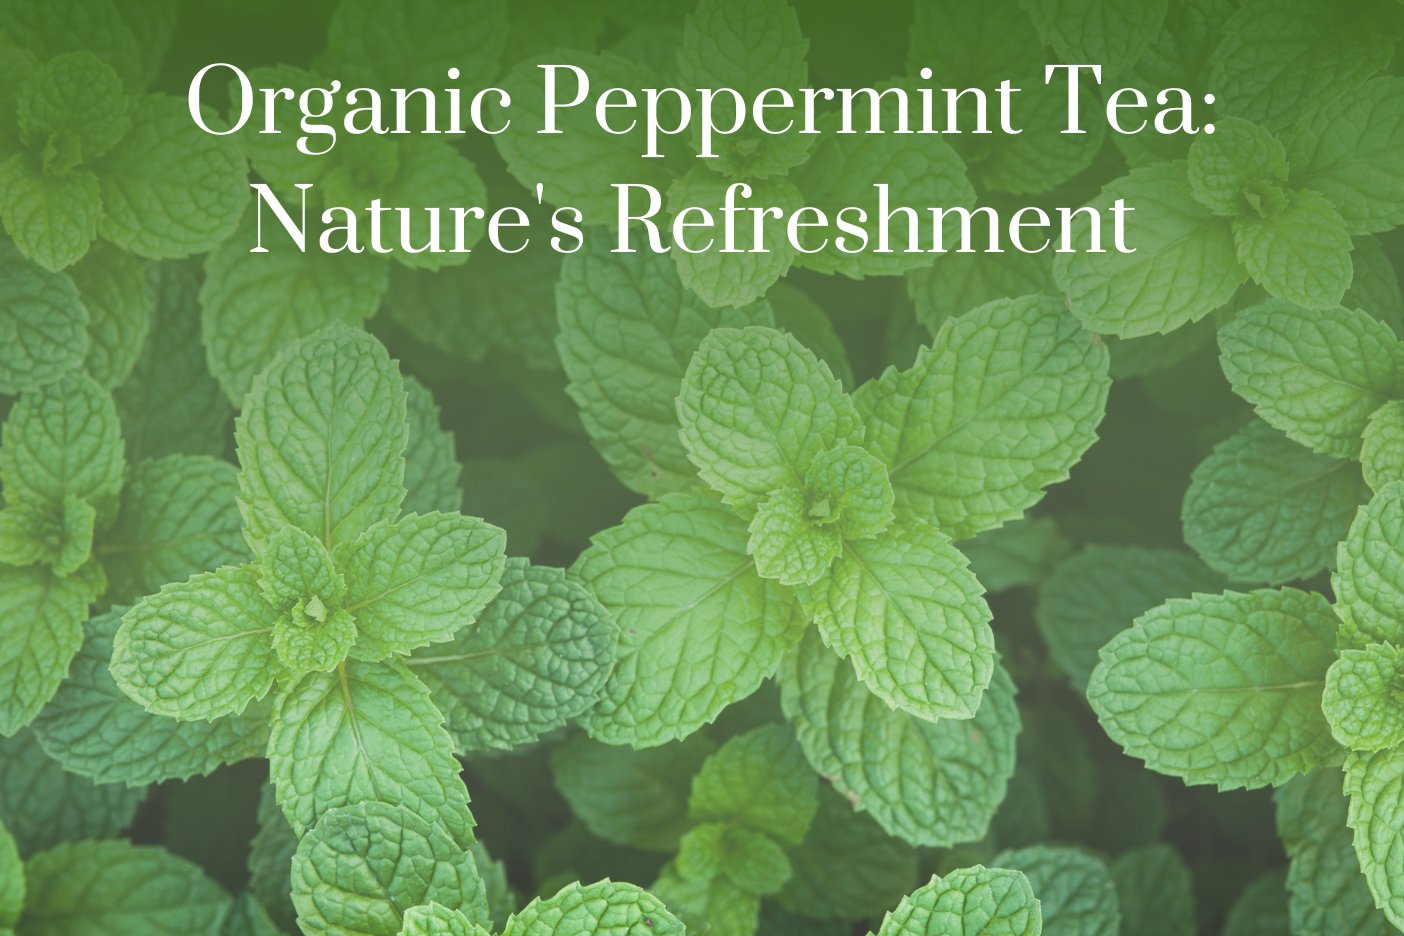 Organic Peppermint Tea: Nature's Refreshment 🍃 - Full Leaf Tea Company